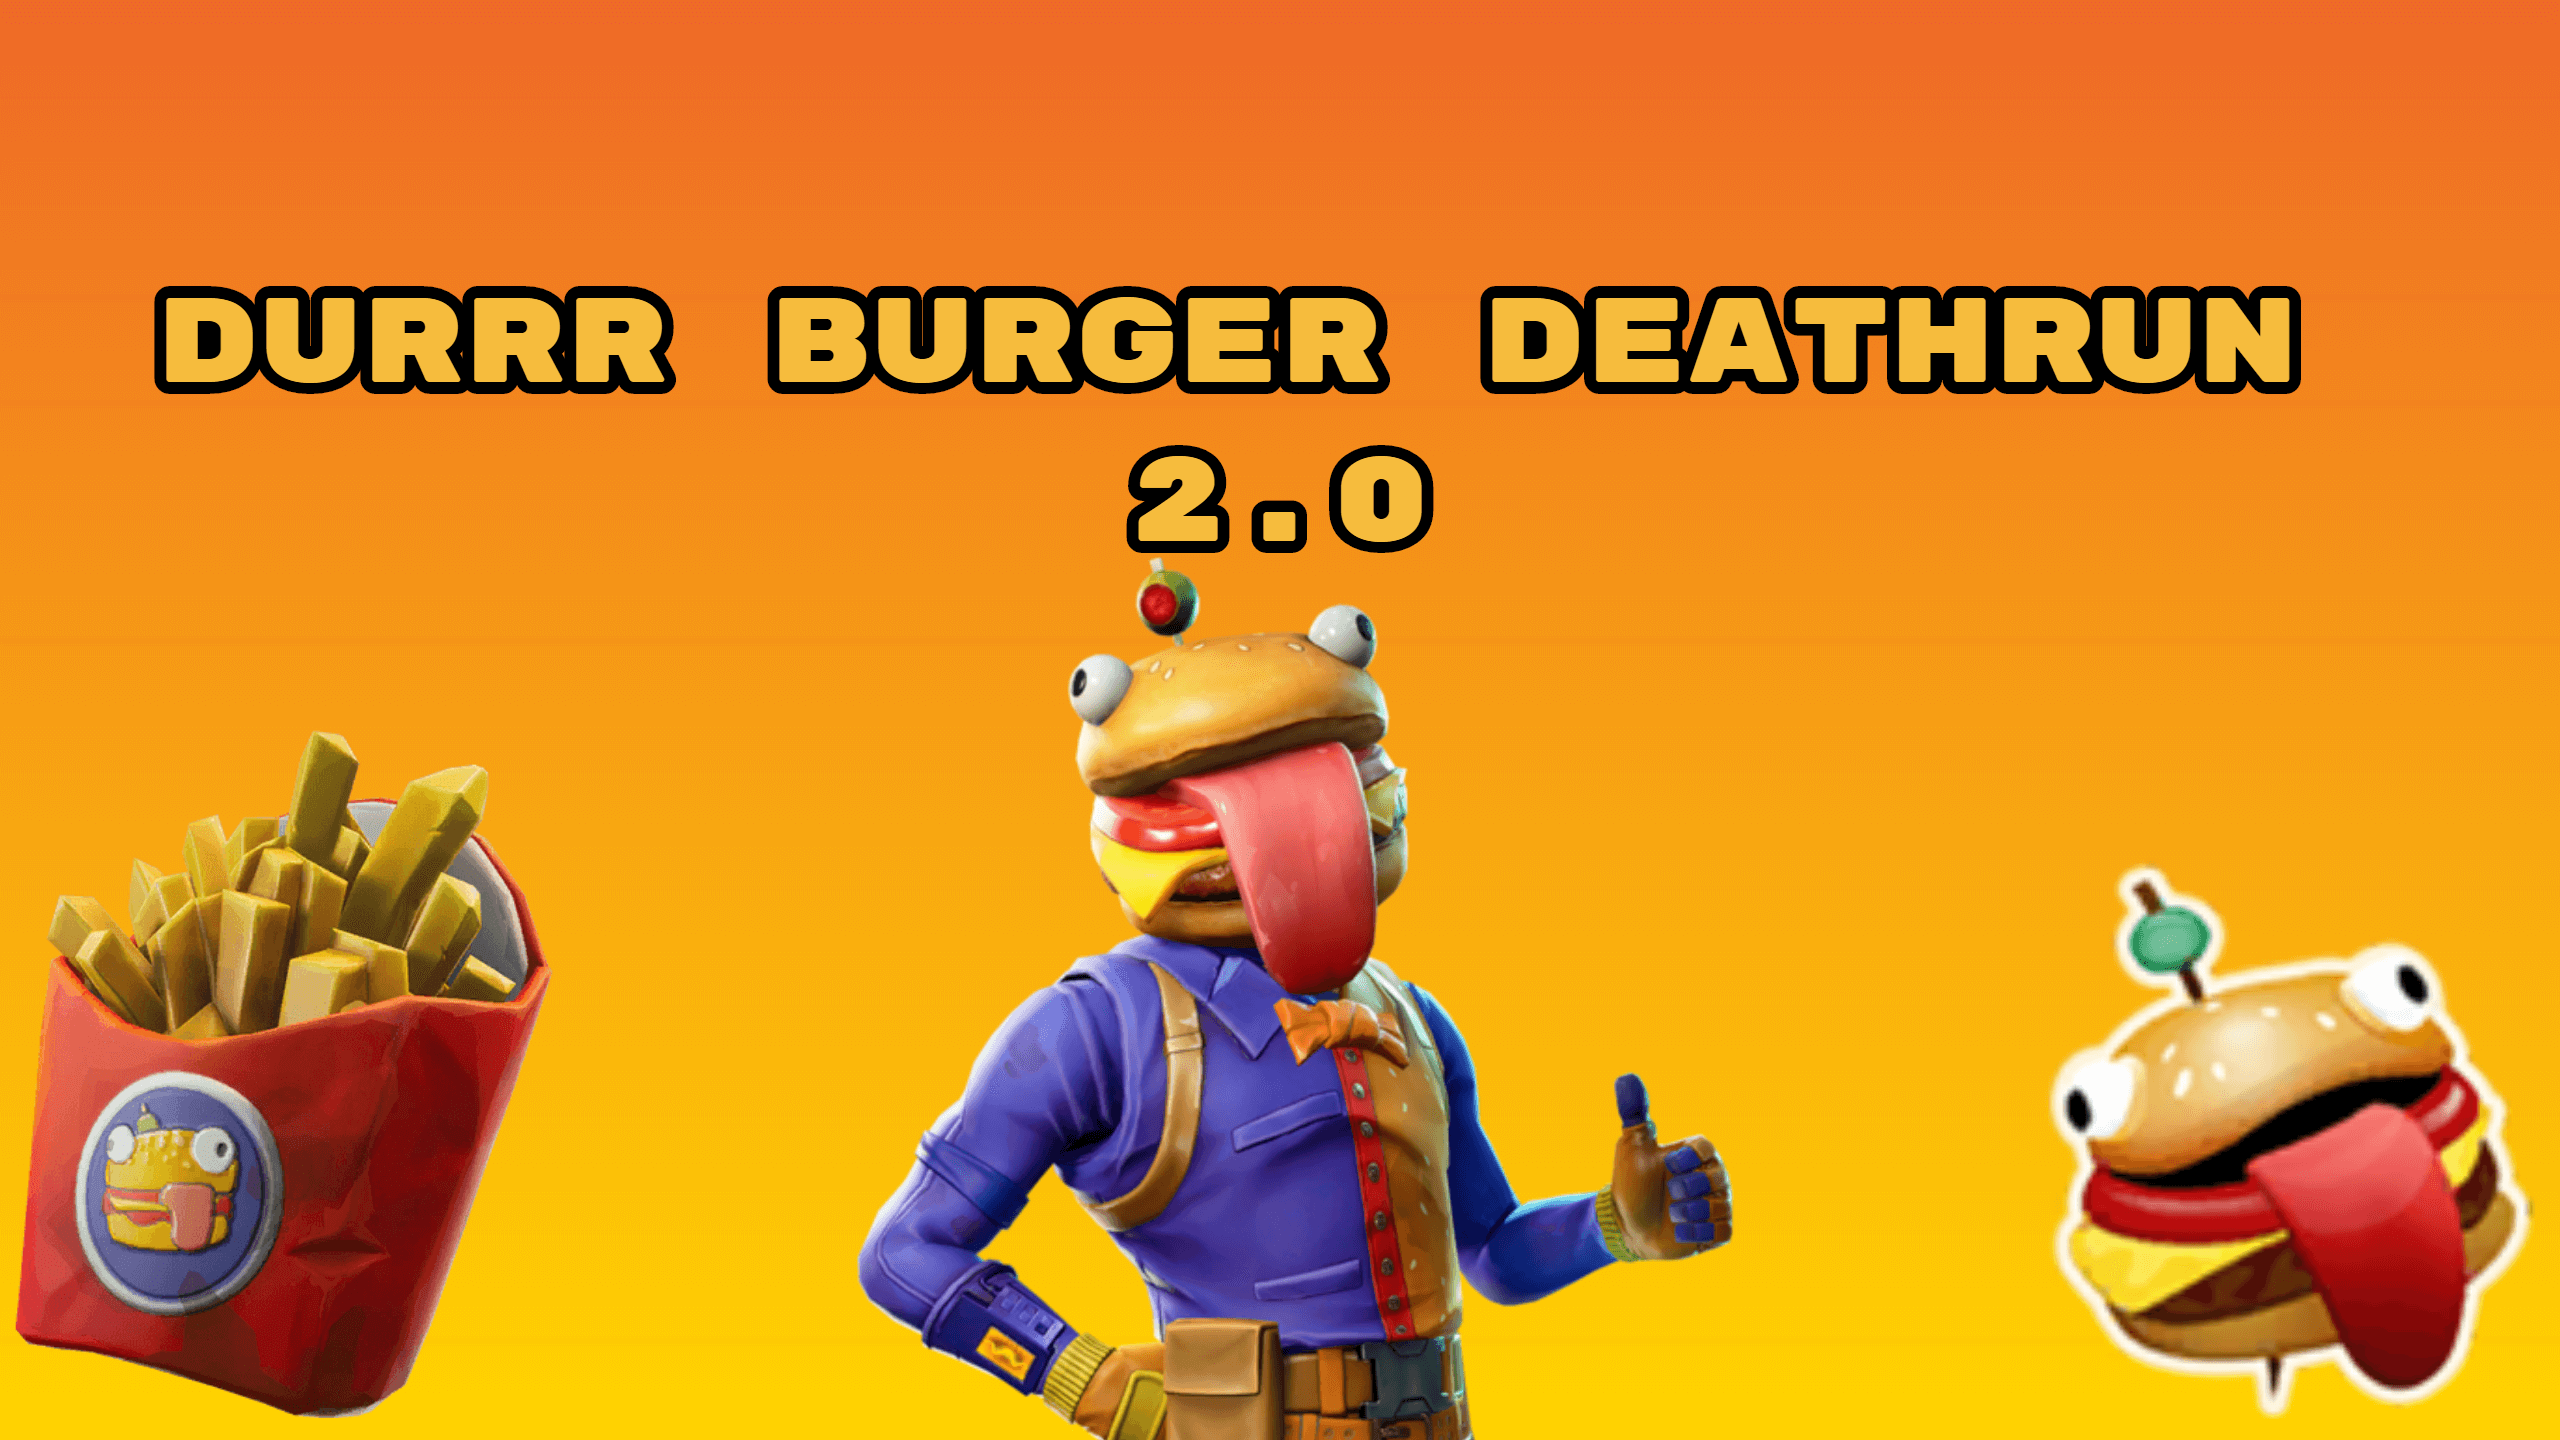 durrr burger deathrun 2 0 - lava death run fortnite code dolphindom